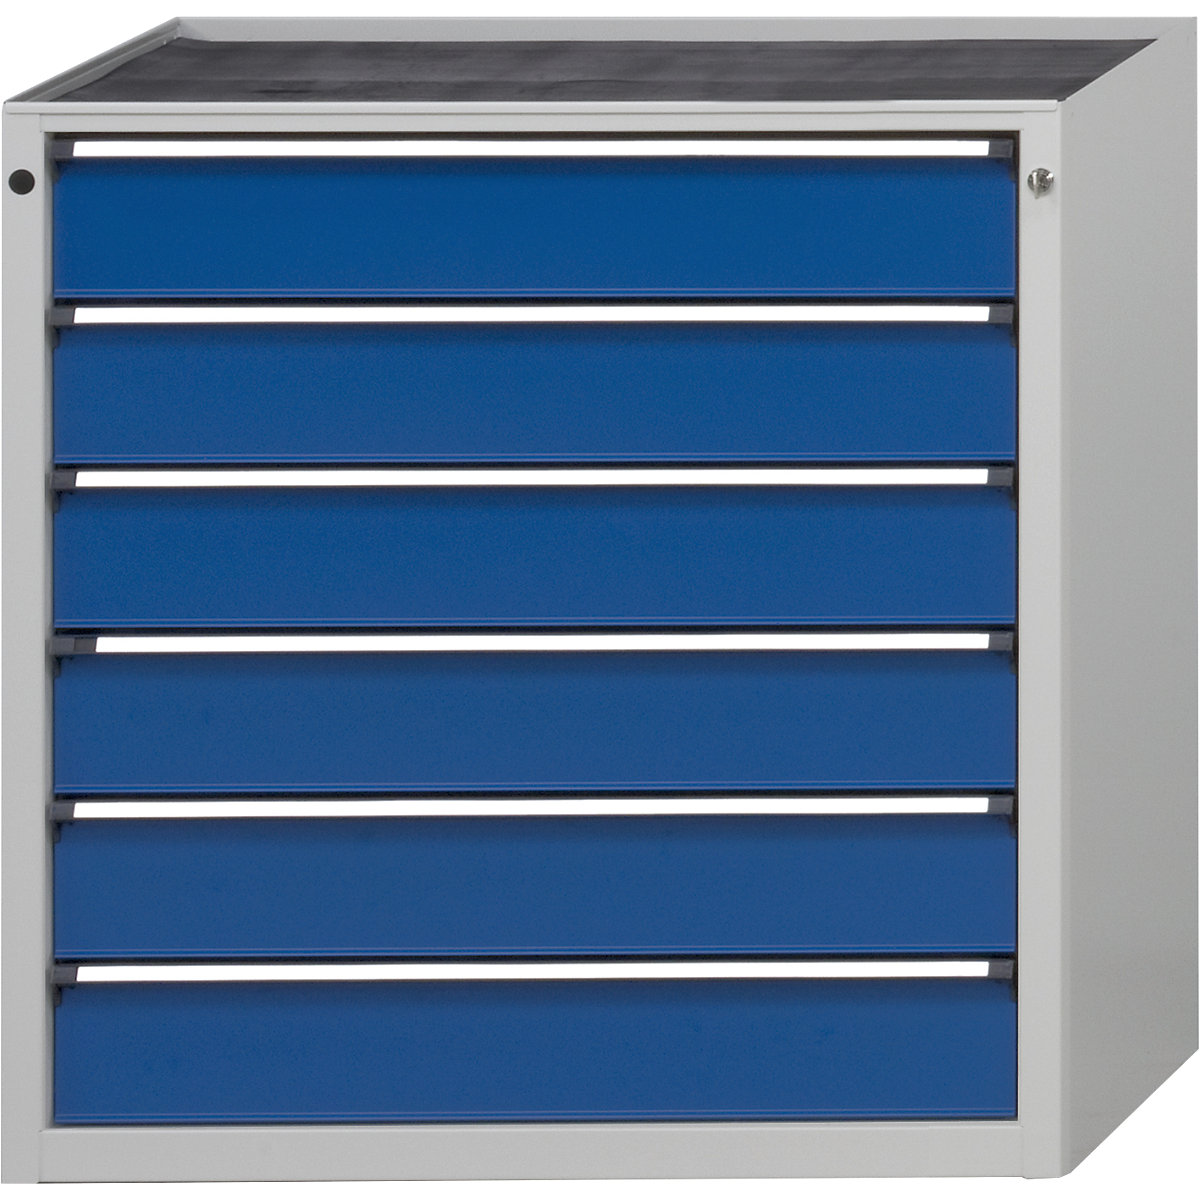 Armoire à tiroirs sans plateau – ANKE, largeur 910 mm, charge max. tiroirs 200 kg, 6 tiroirs de 150 mm, façade bleu gentiane-6